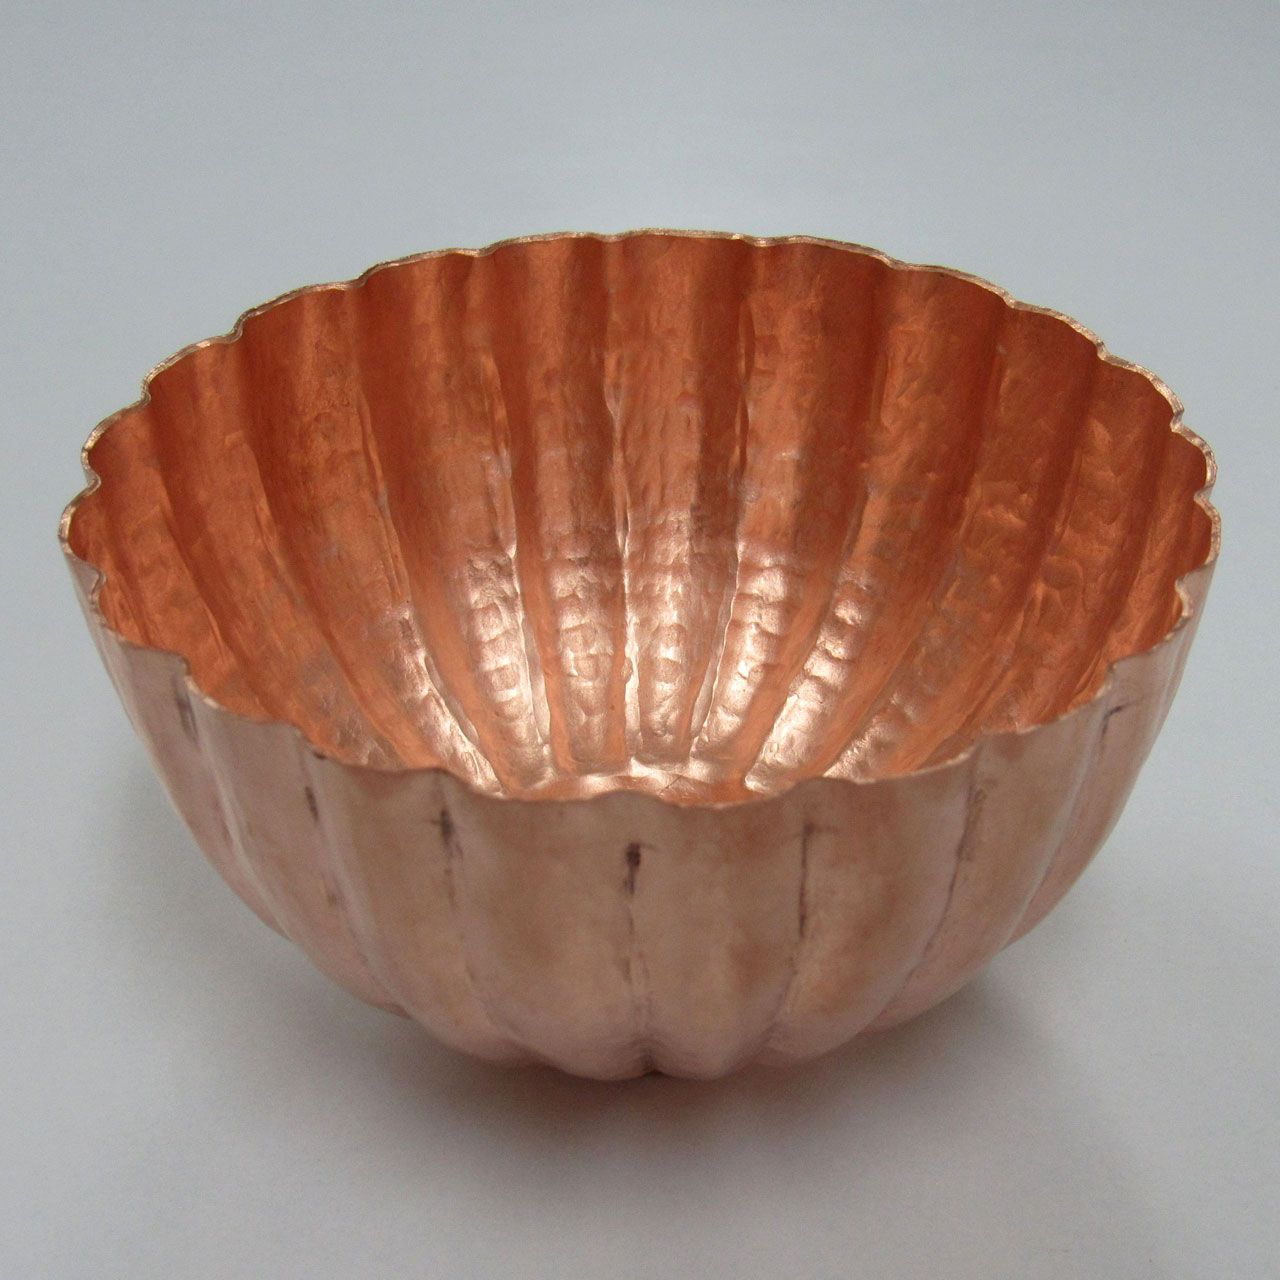 Liwan, Copper Bowl, Product Design, 1980.